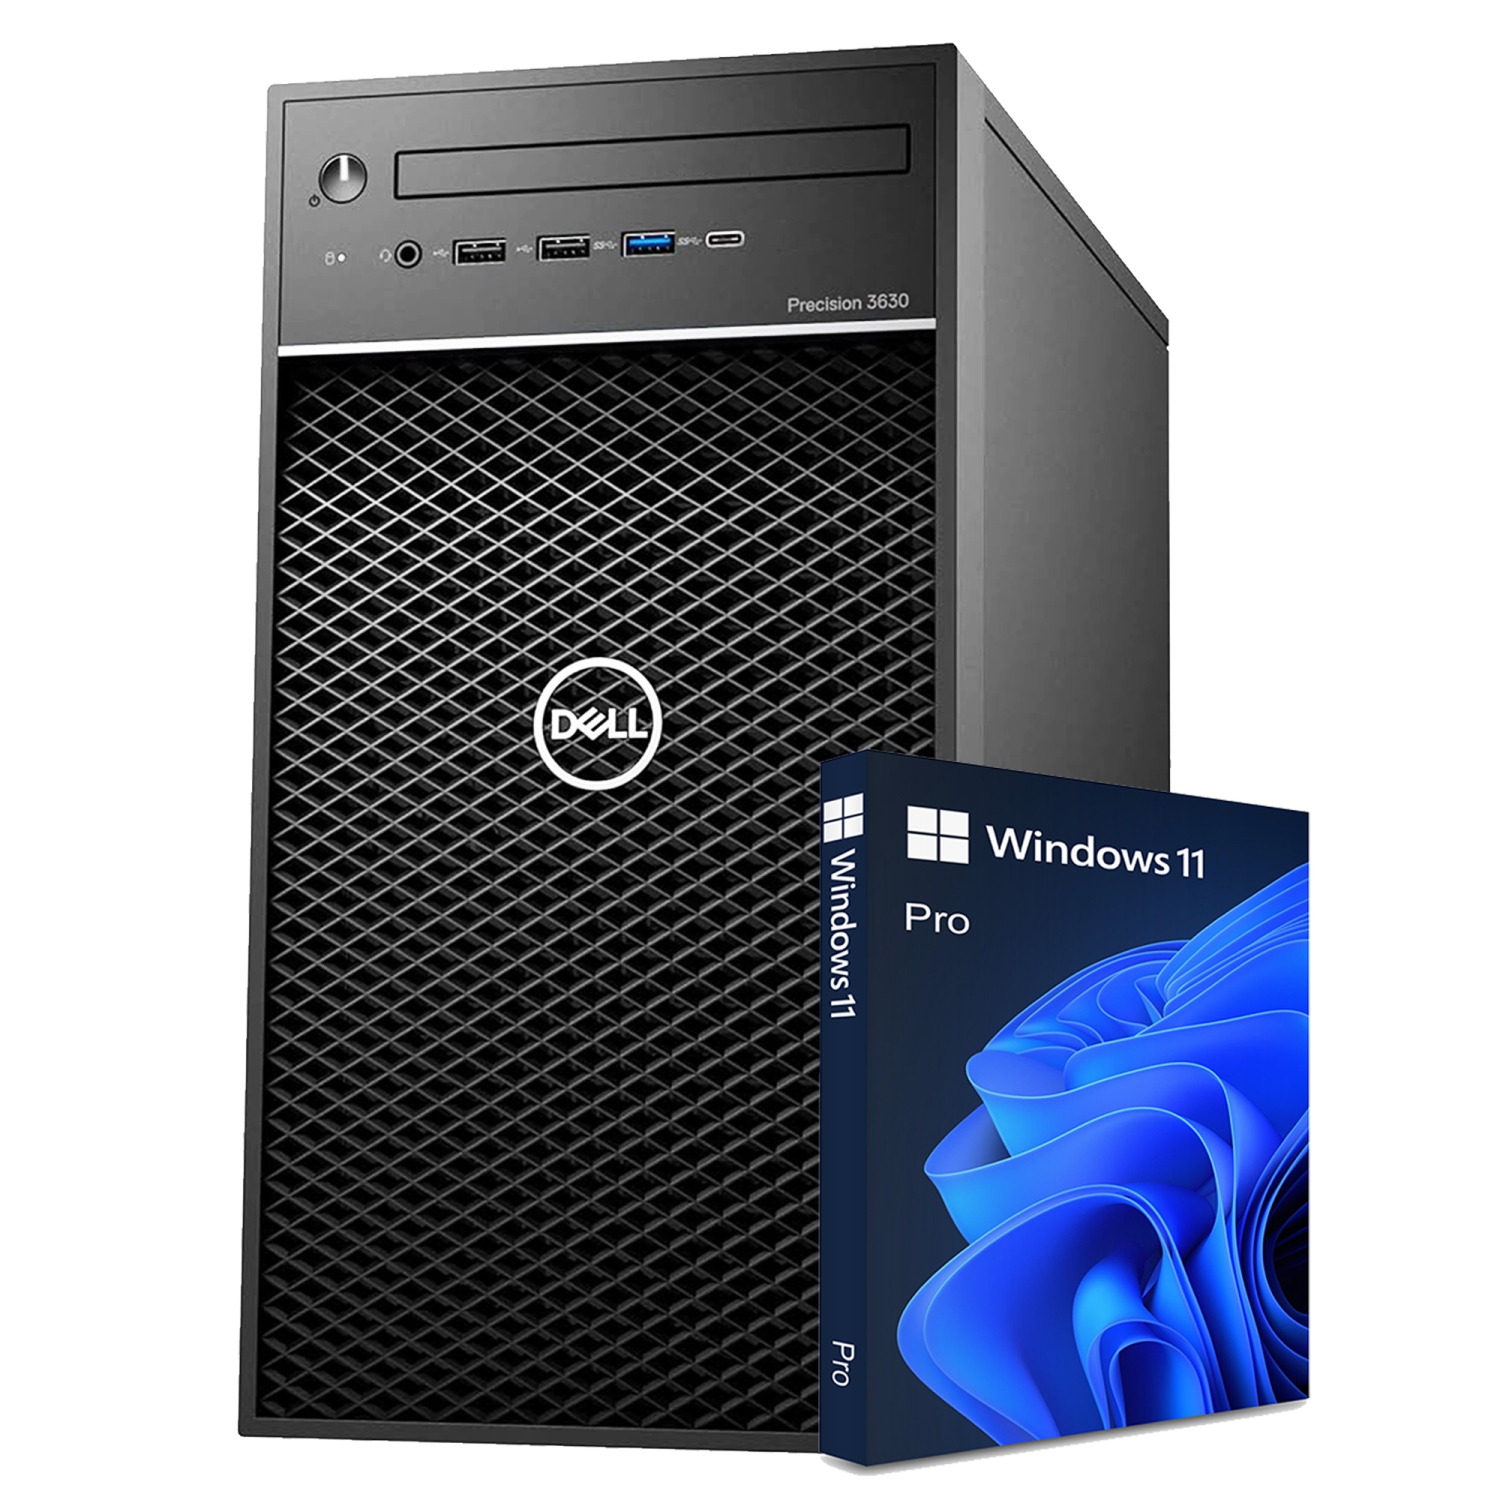 Refurbished (Good) - Business Desktop PC Dell Computer Precision 3630 Tower (Windows 11 Pro/ Intel Core i7 upto 4.60 GHz 8th Gen/ 2000GB SSD/ 32GB DDR4 RAM/ WIFI-Bluetooth Adapter)